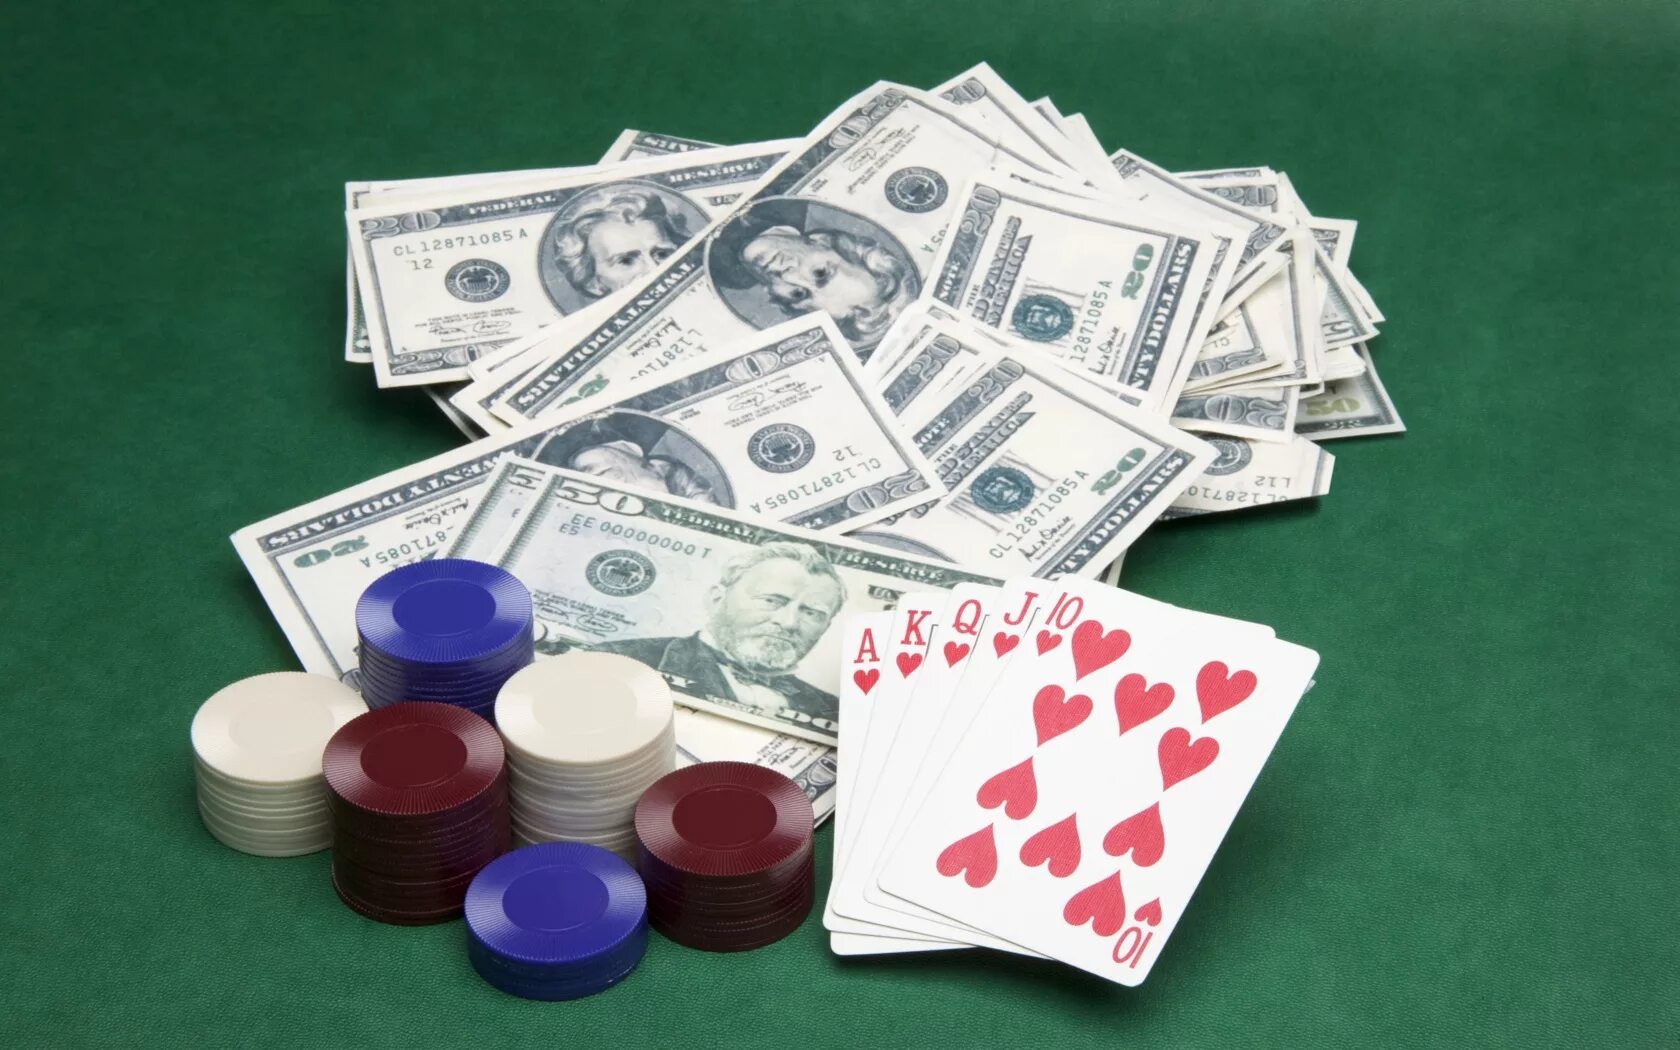 Покер на деньги. Фишки и деньги Покер. Деньги на покерном столе. Покер заработок. Покер ру на деньги